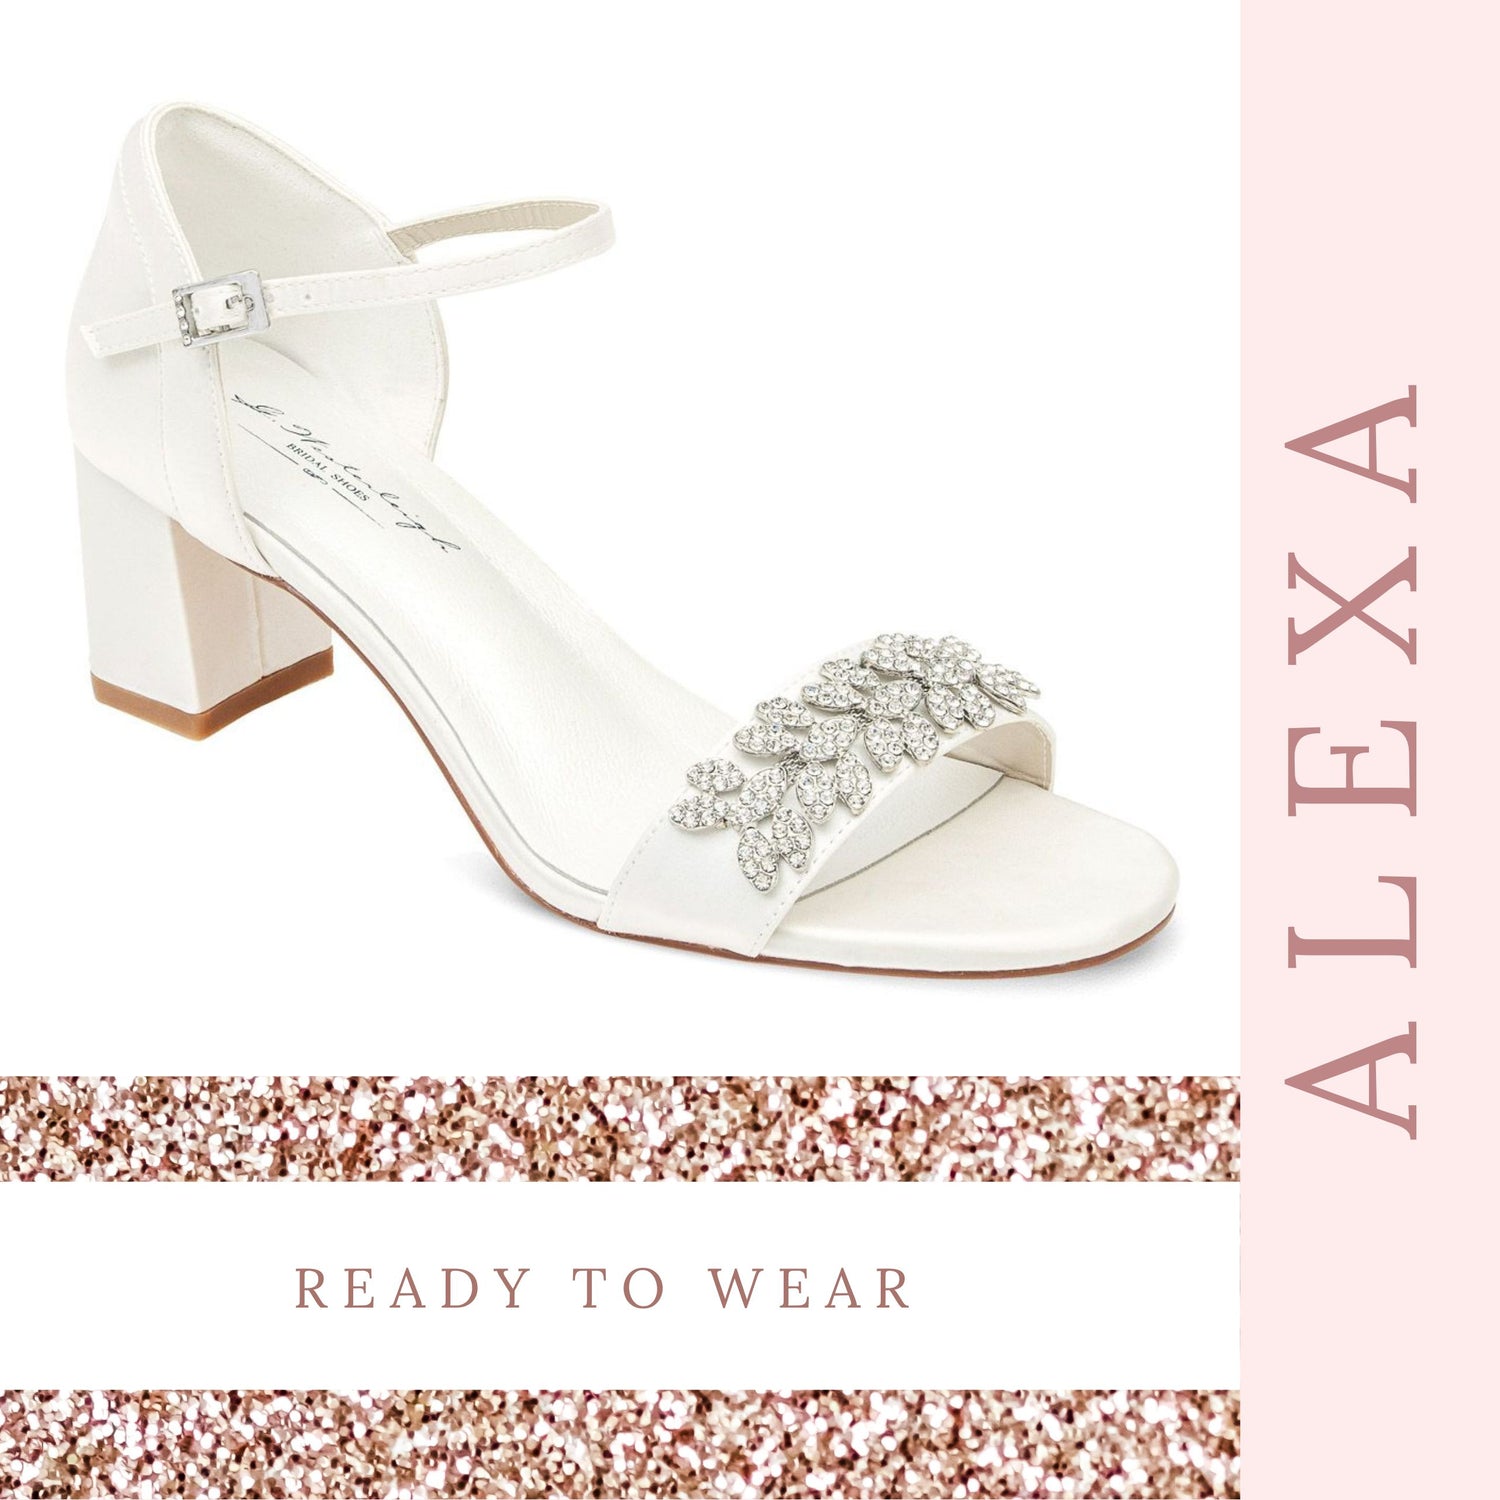 alexa-wedding-shoes